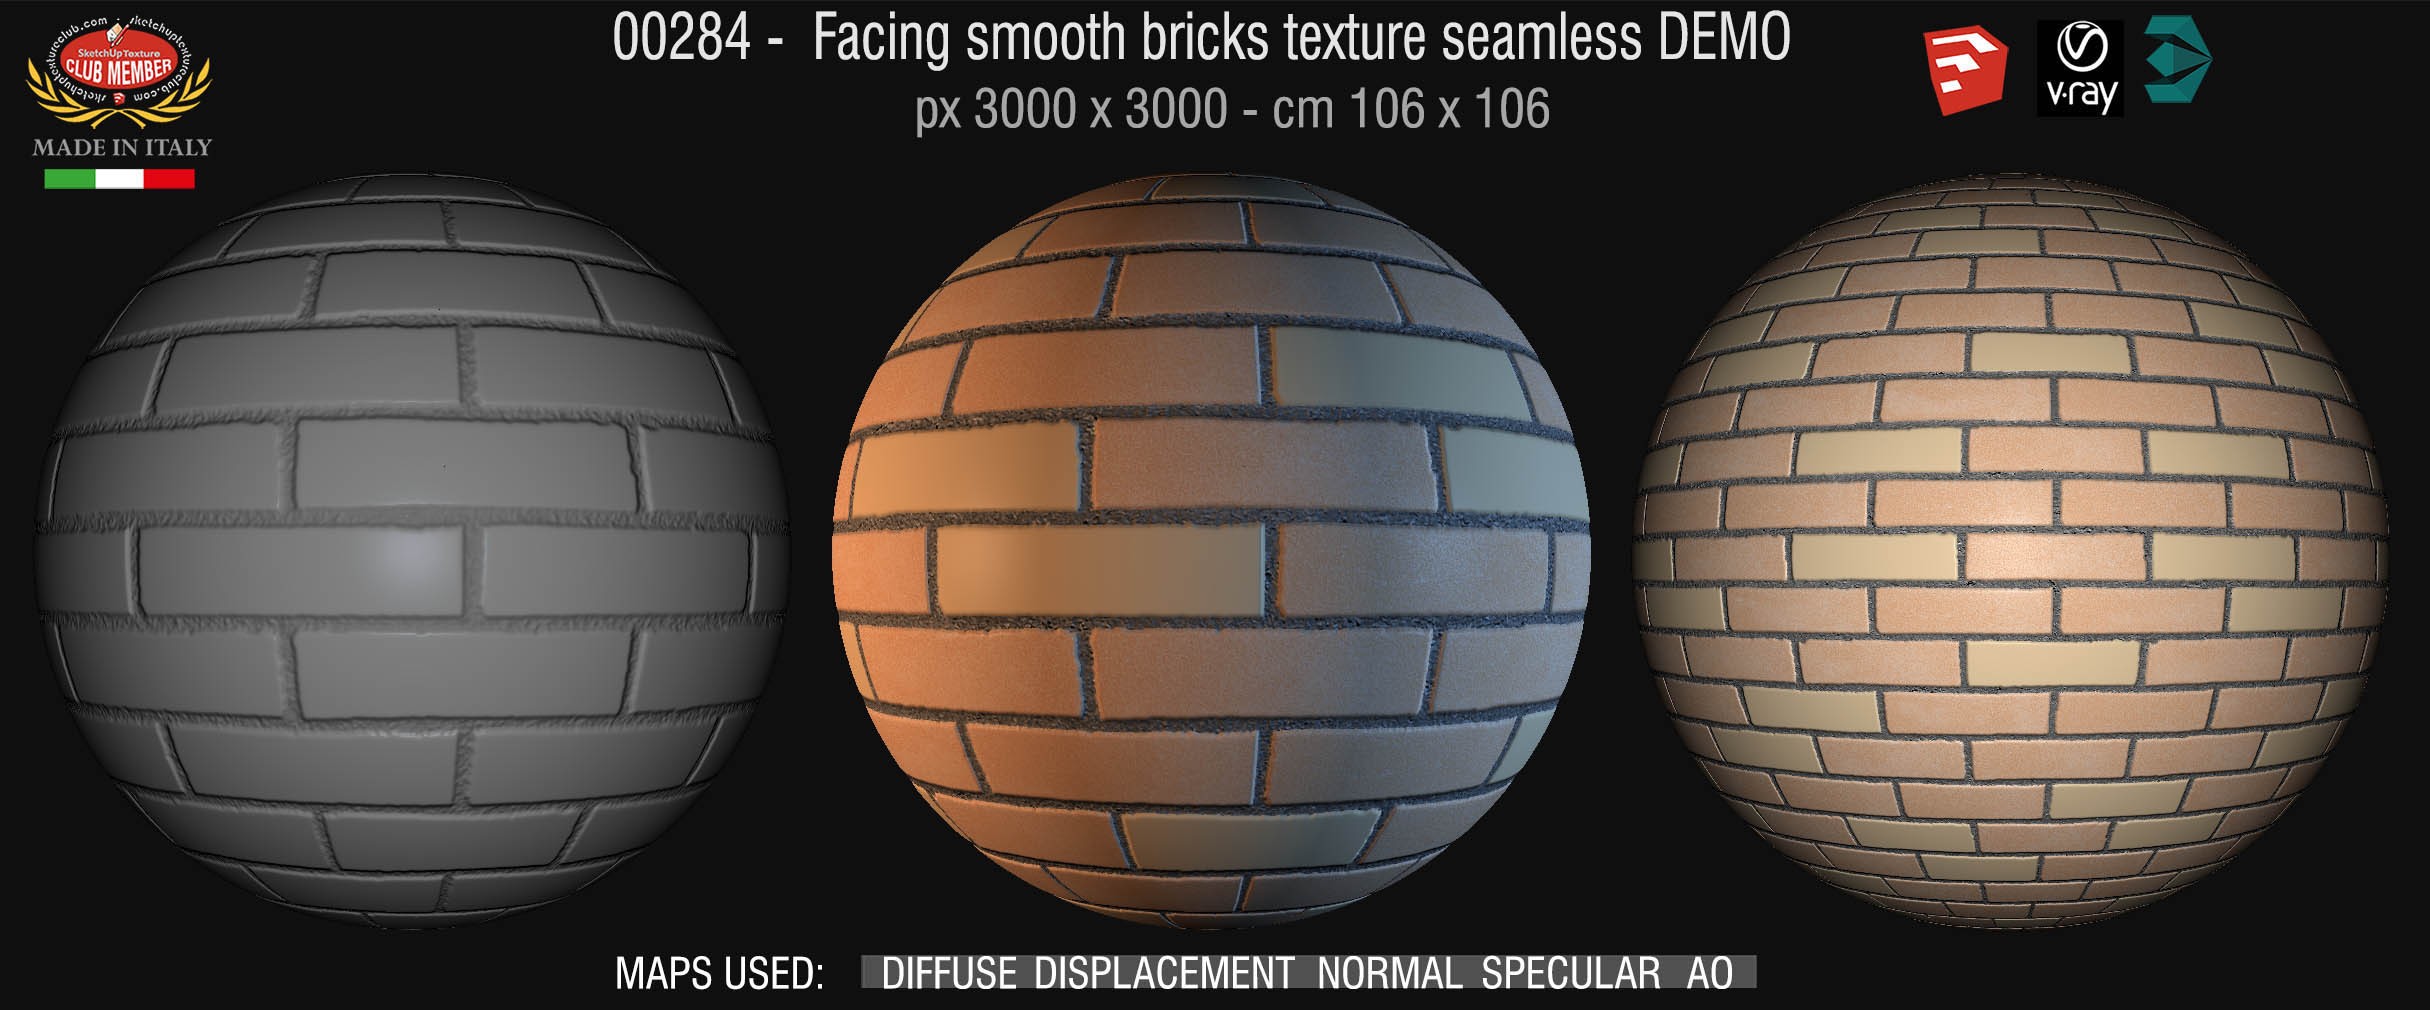 00284 Facing smooth bricks texture seamless + maps DEMO